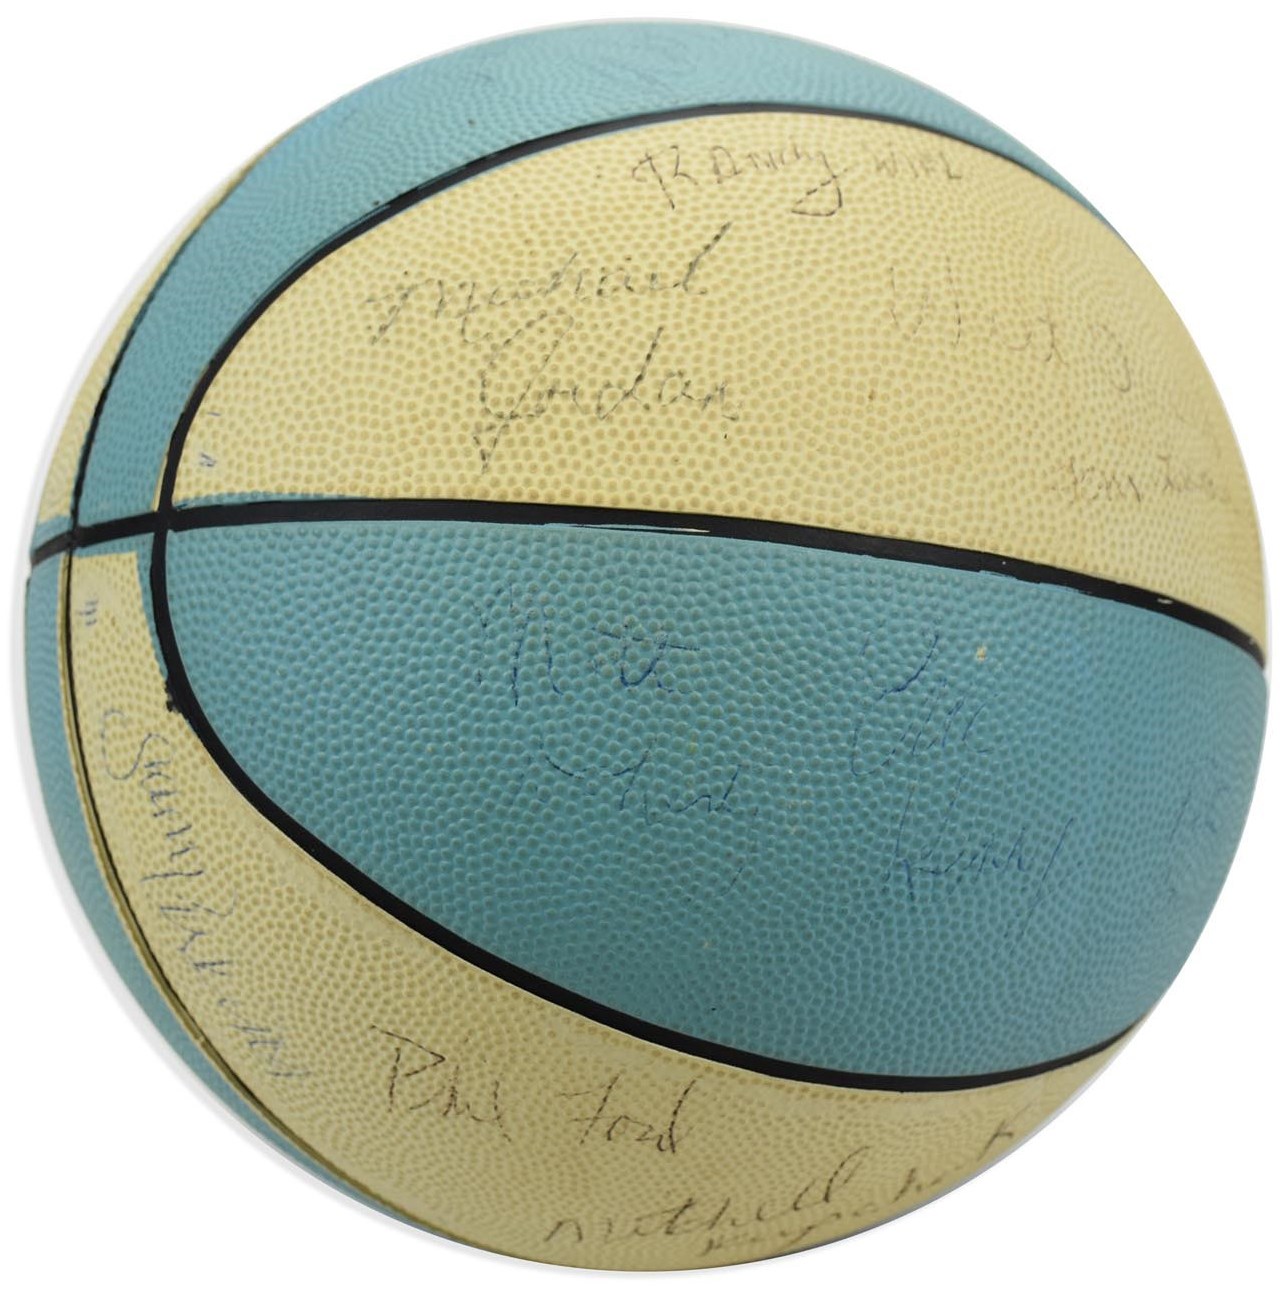 Basketball - 1970s-80s UNC Tar Heels Signed Basketball with Freshman Michael Jordan